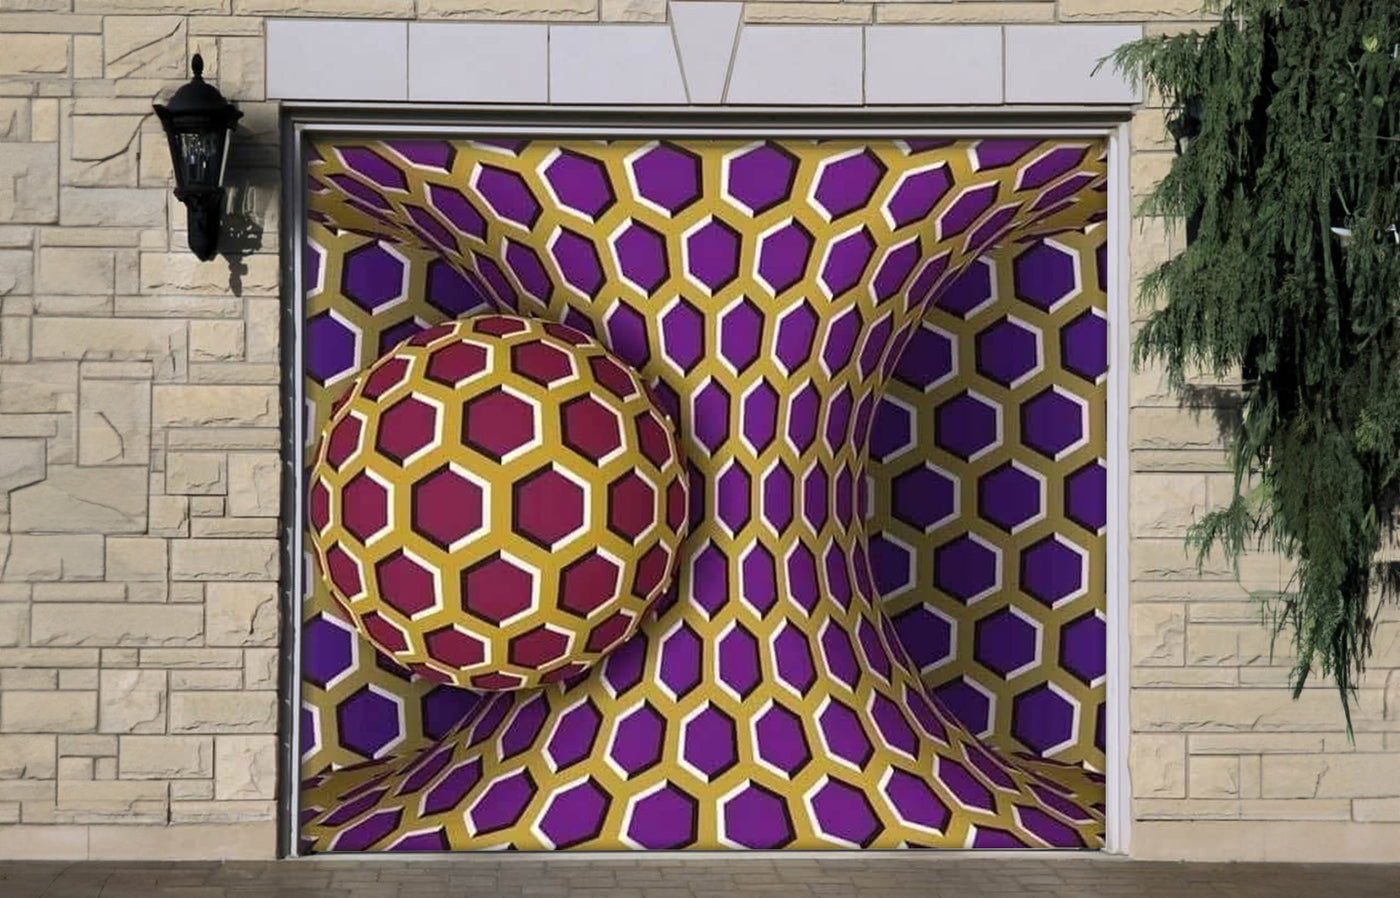 Psychedelic Illusion Cover Garage Door Cover Wrap